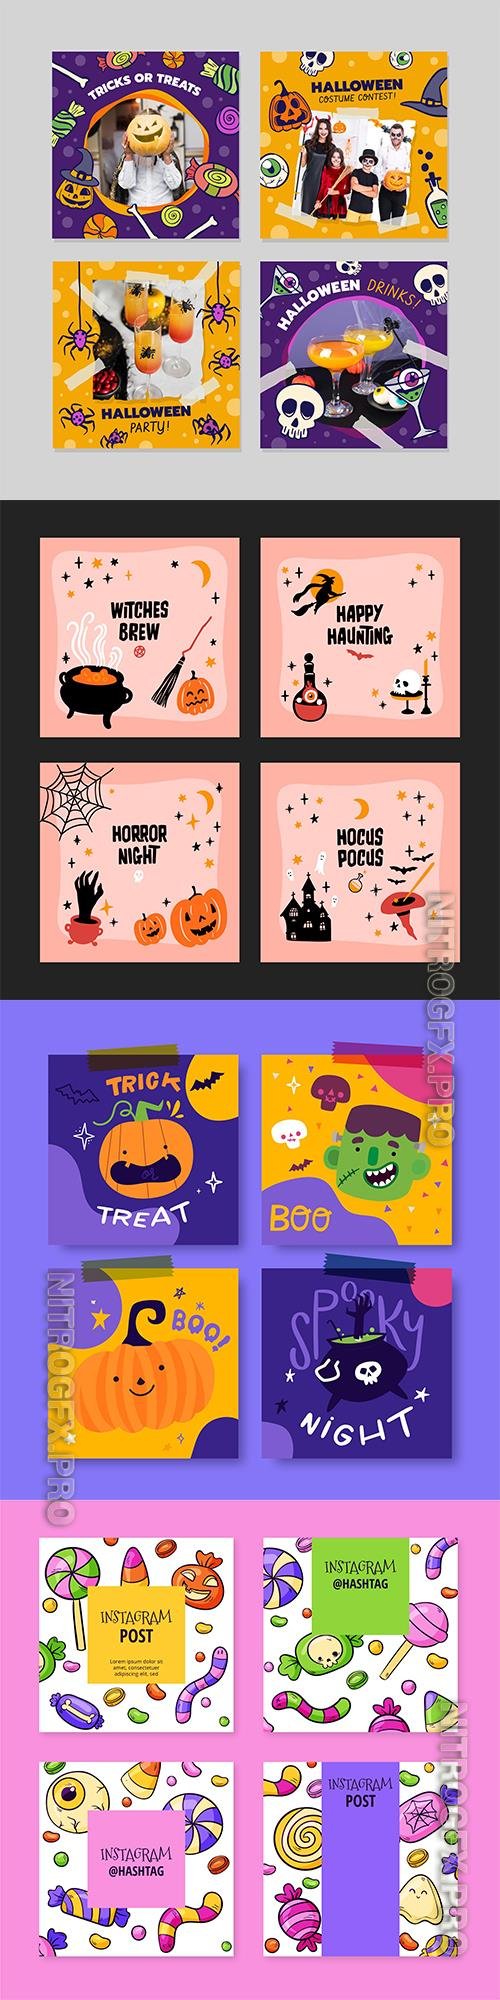 Hand-drawn Flat Halloween Instagram Posts Collection Vol 2